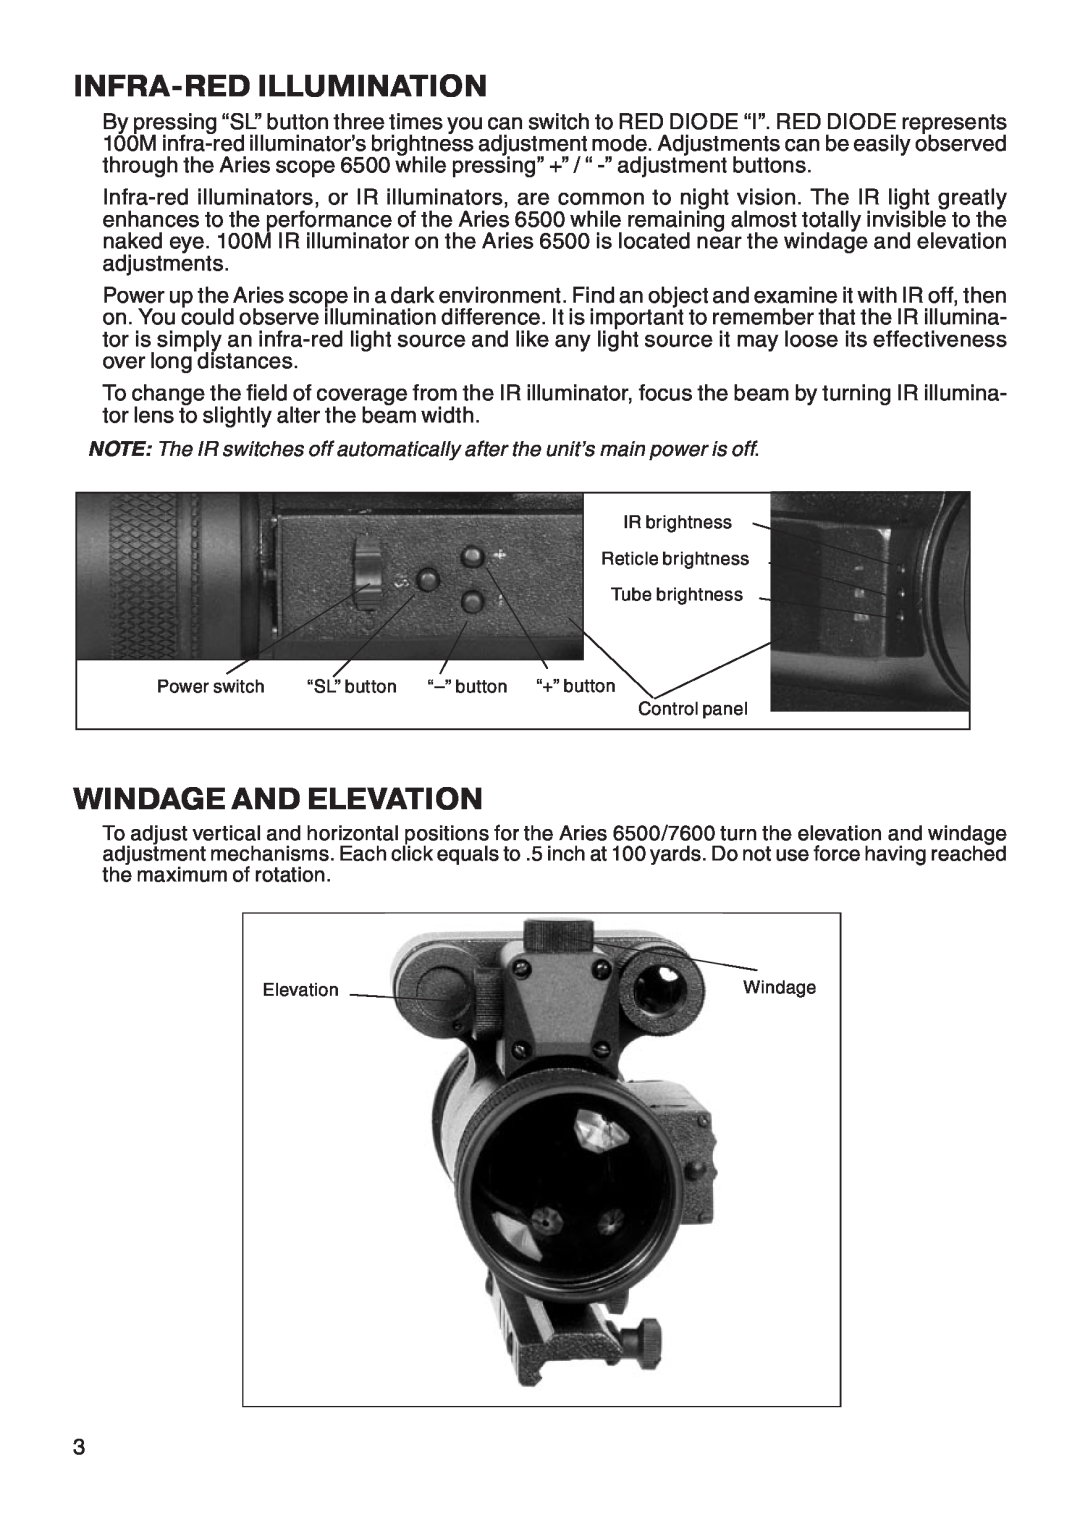 ATN Mk6500 manual Infra-Redillumination, Windage And Elevation 